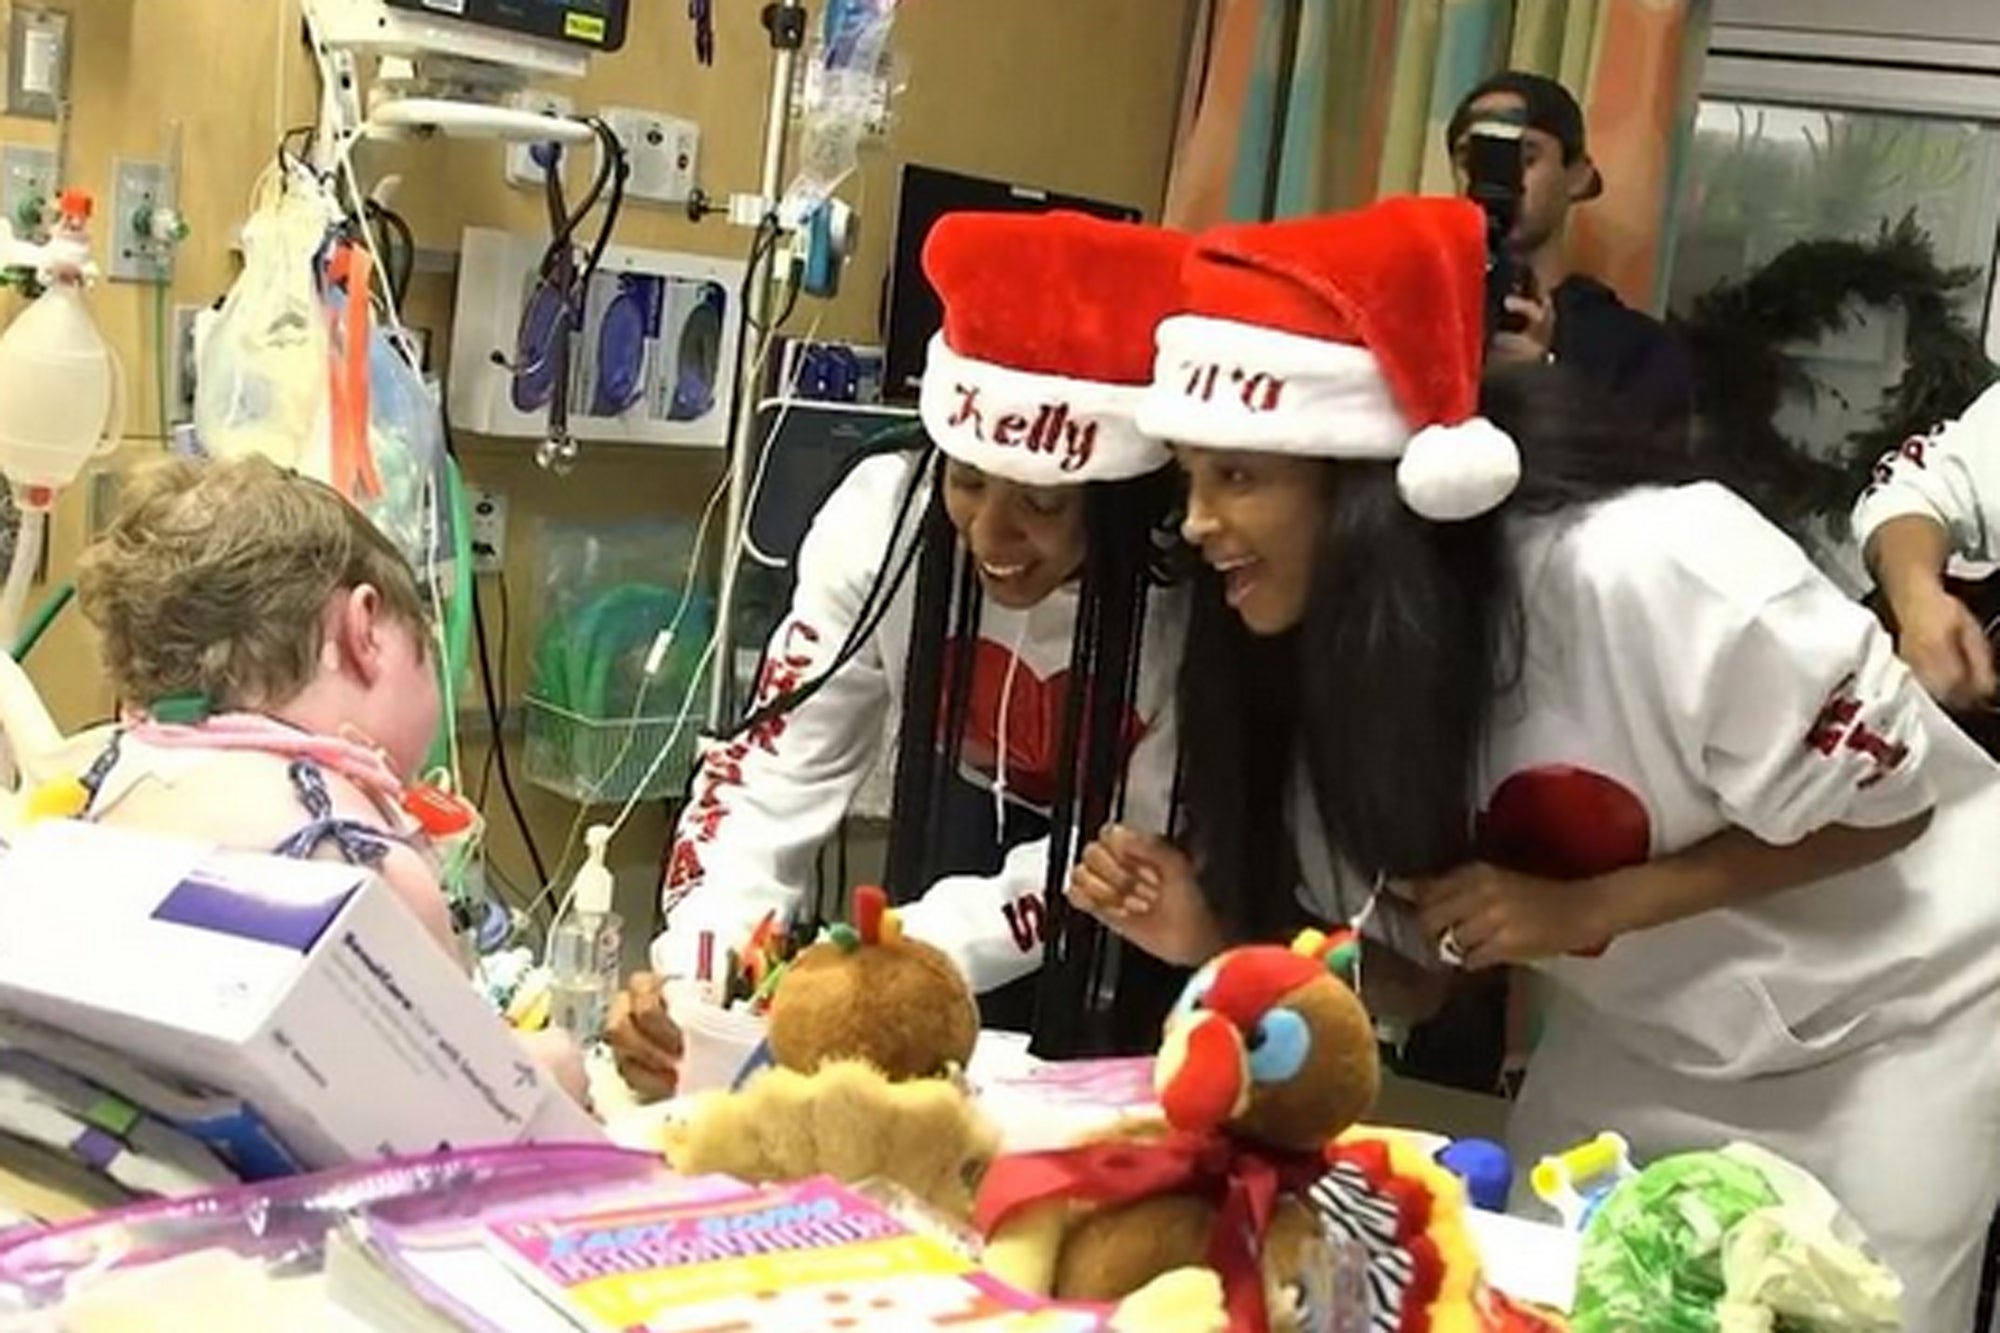 Kelly Rowland And Ciara Sing Christmas Carols To Bring Some Holiday Cheer To Sick Children